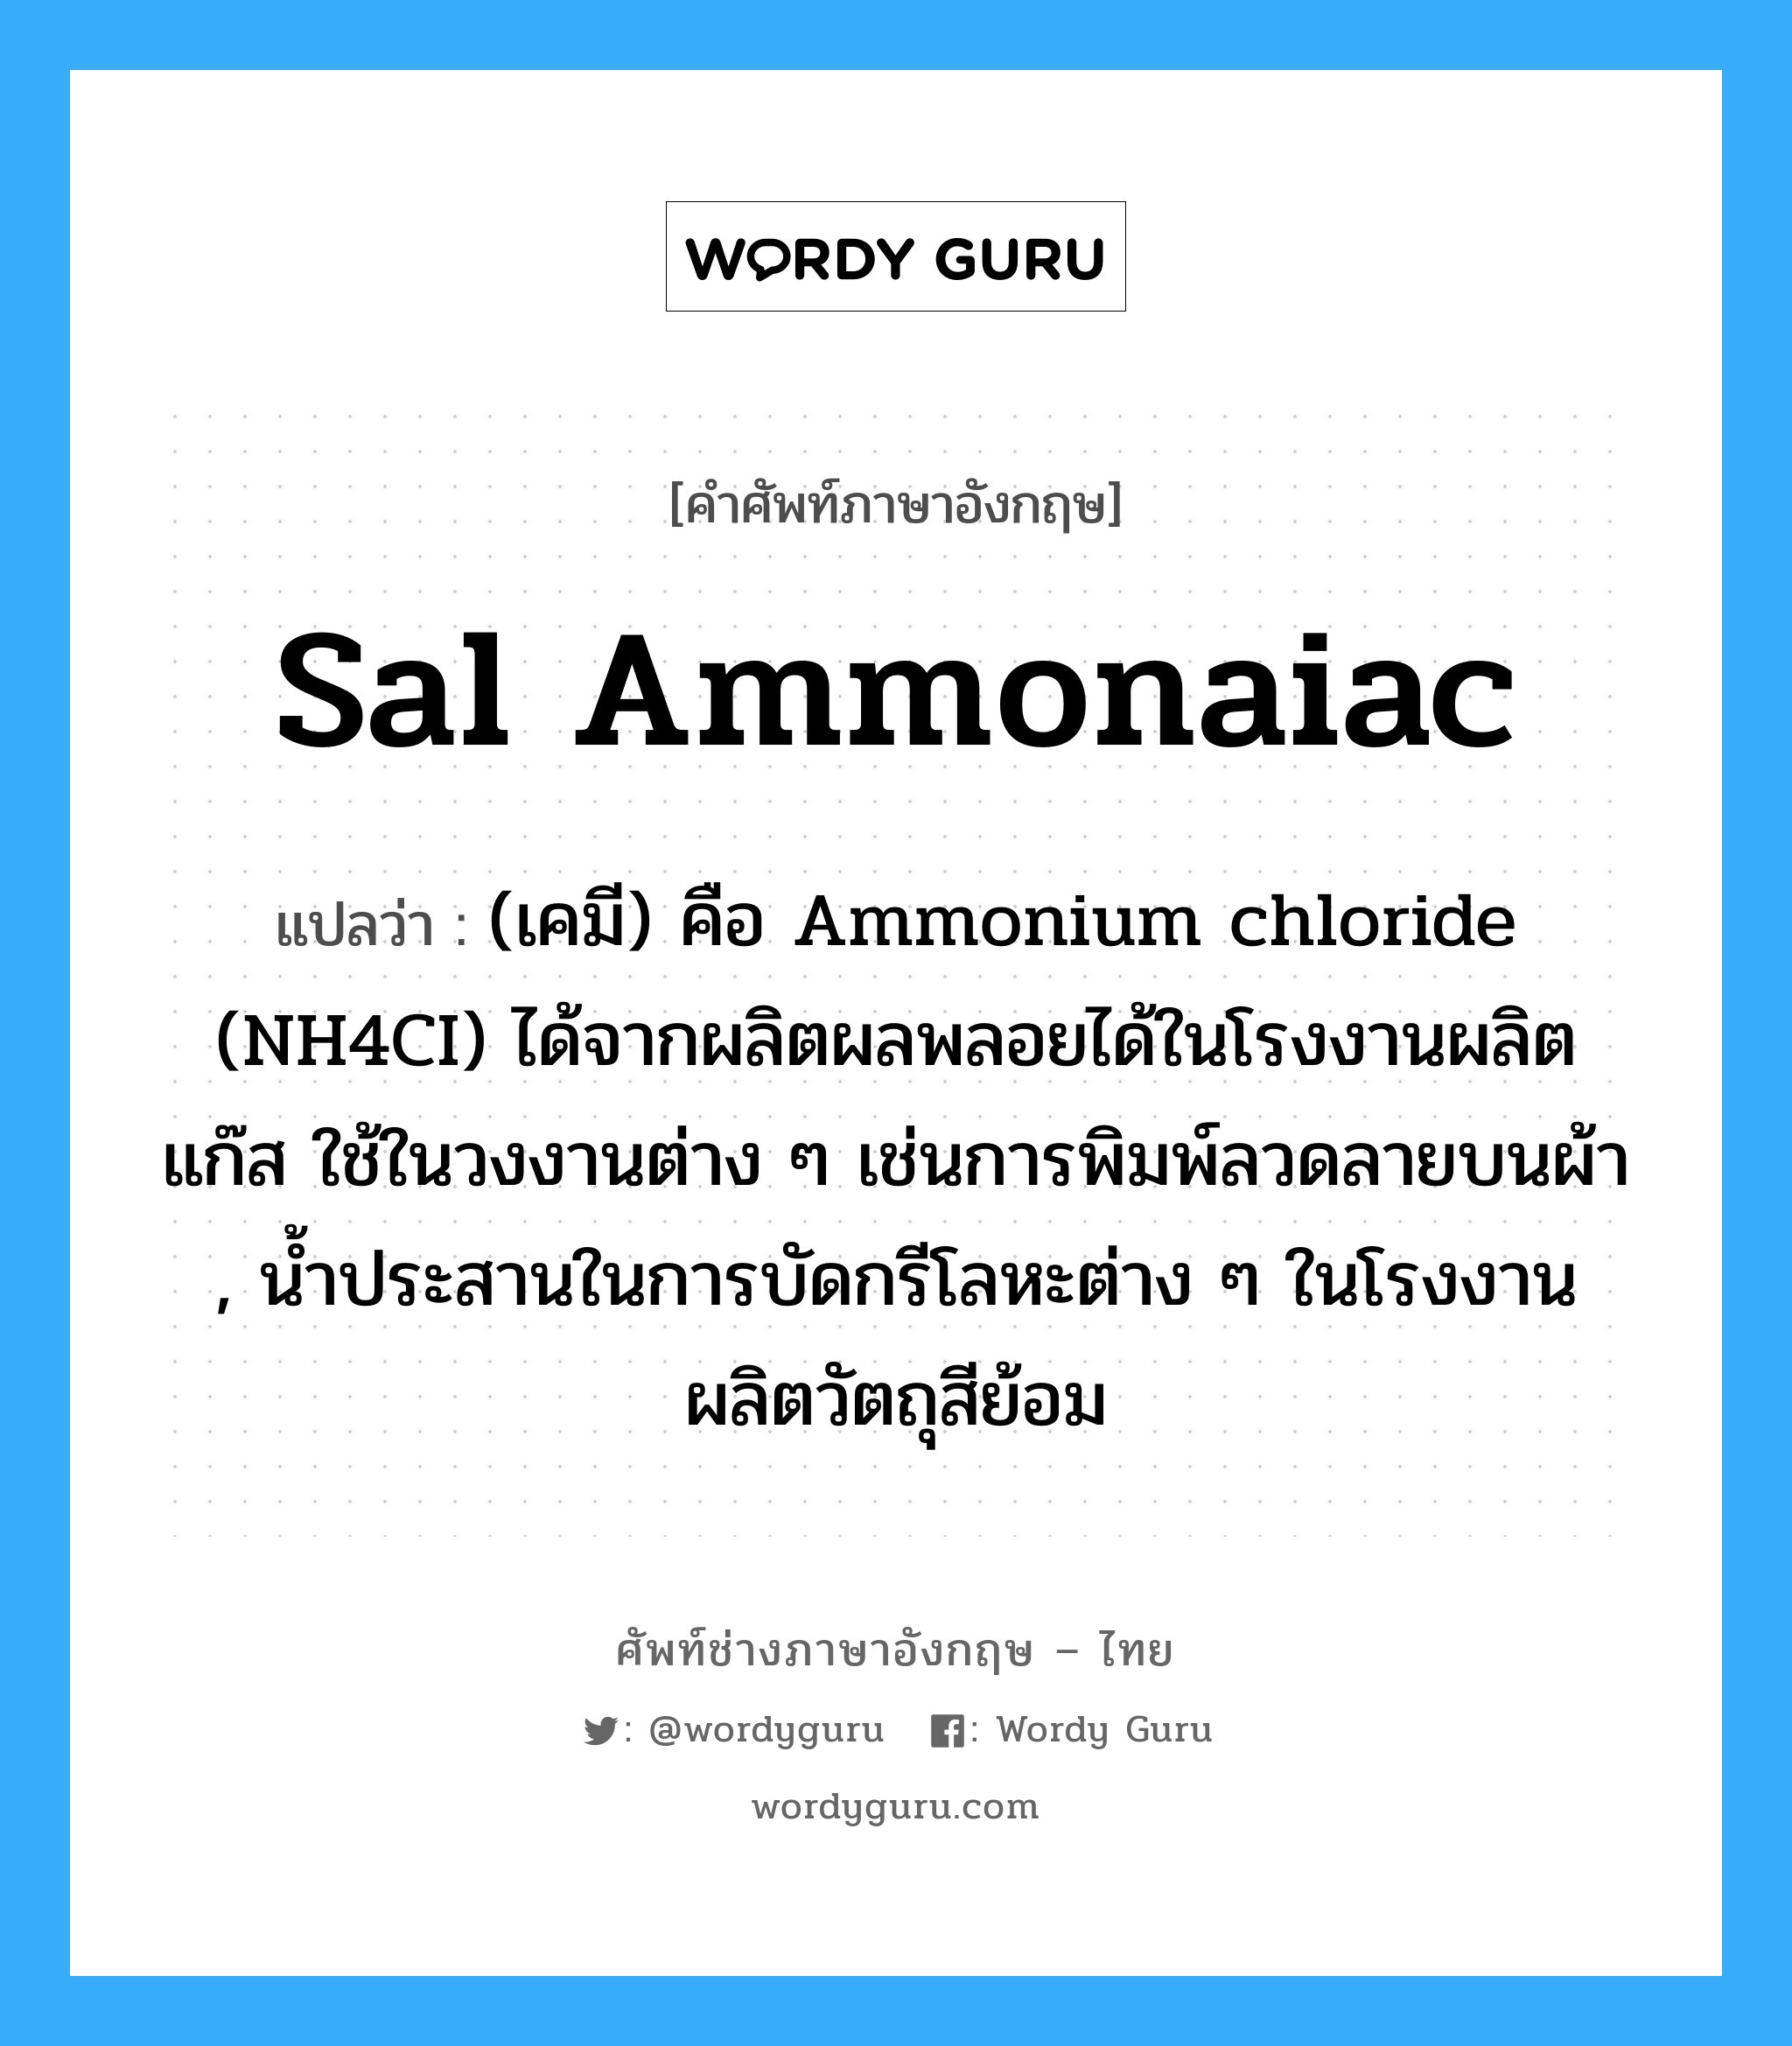 sal ammonaiac แปลว่า?, คำศัพท์ช่างภาษาอังกฤษ - ไทย sal ammonaiac คำศัพท์ภาษาอังกฤษ sal ammonaiac แปลว่า (เคมี) คือ Ammonium chloride (NH4CI) ได้จากผลิตผลพลอยได้ในโรงงานผลิตแก๊ส ใช้ในวงงานต่าง ๆ เช่นการพิมพ์ลวดลายบนผ้า , น้ำประสานในการบัดกรีโลหะต่าง ๆ ในโรงงานผลิตวัตถุสีย้อม